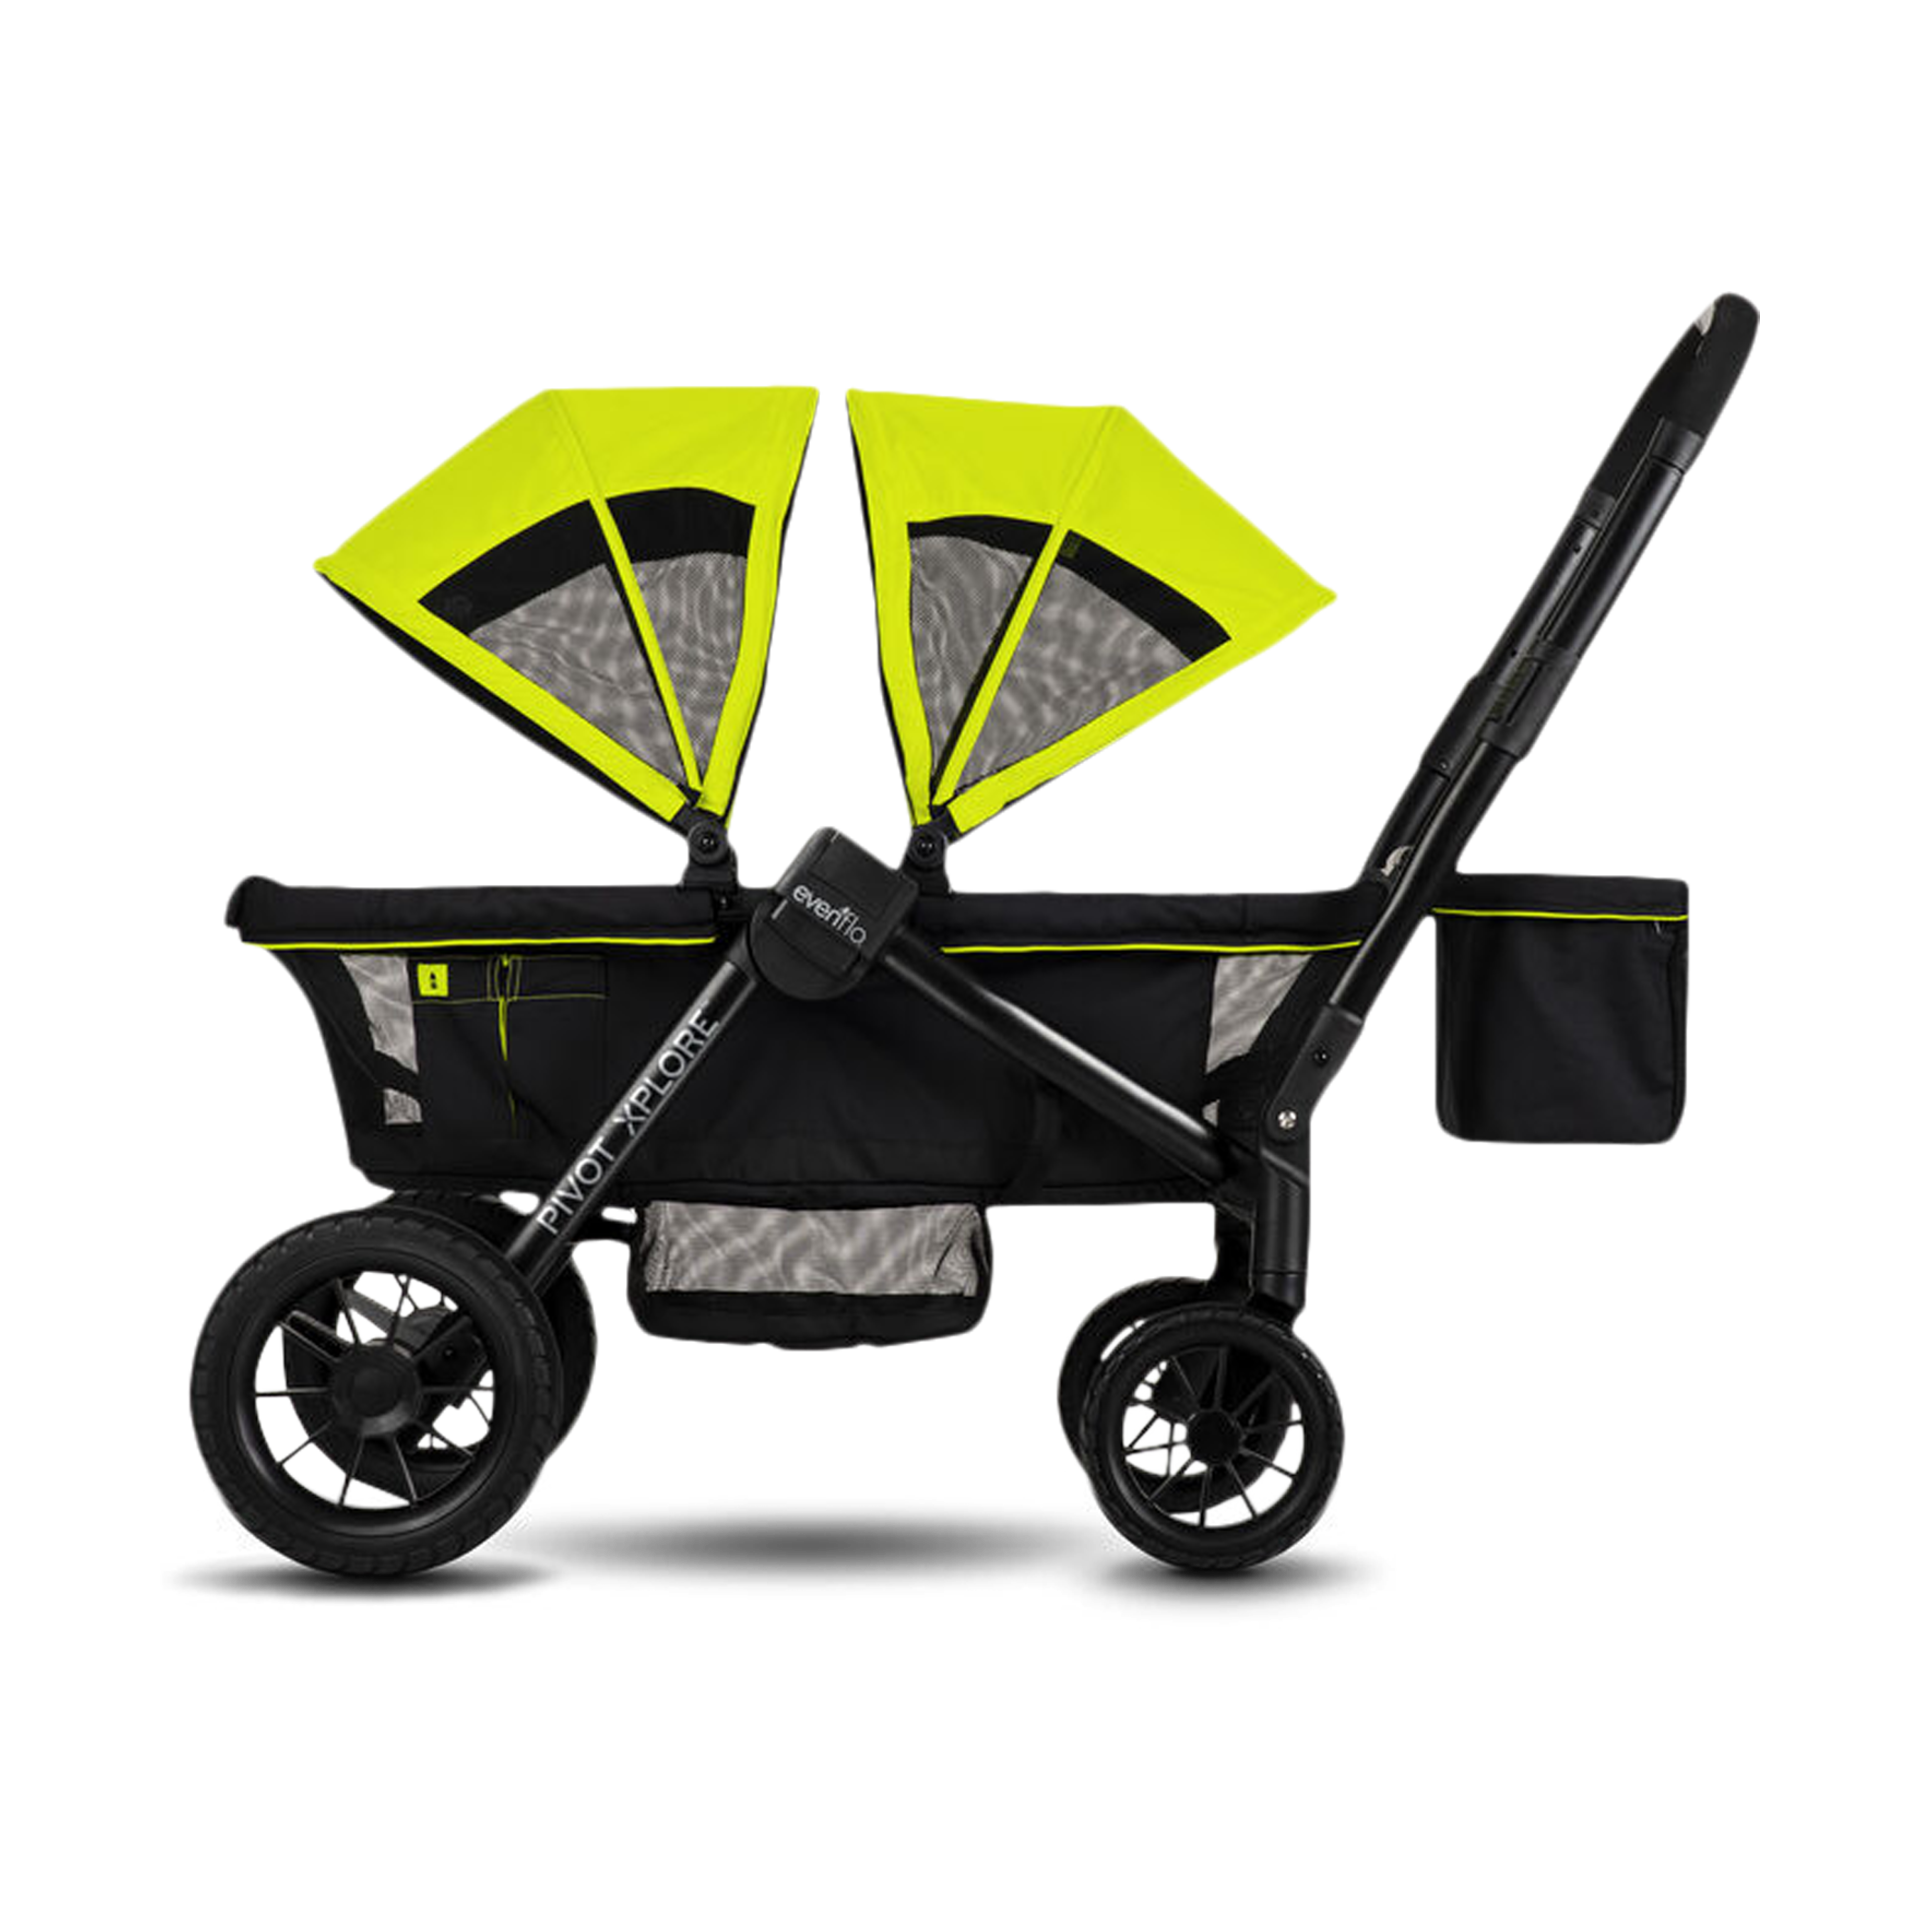 baby wagon stroller